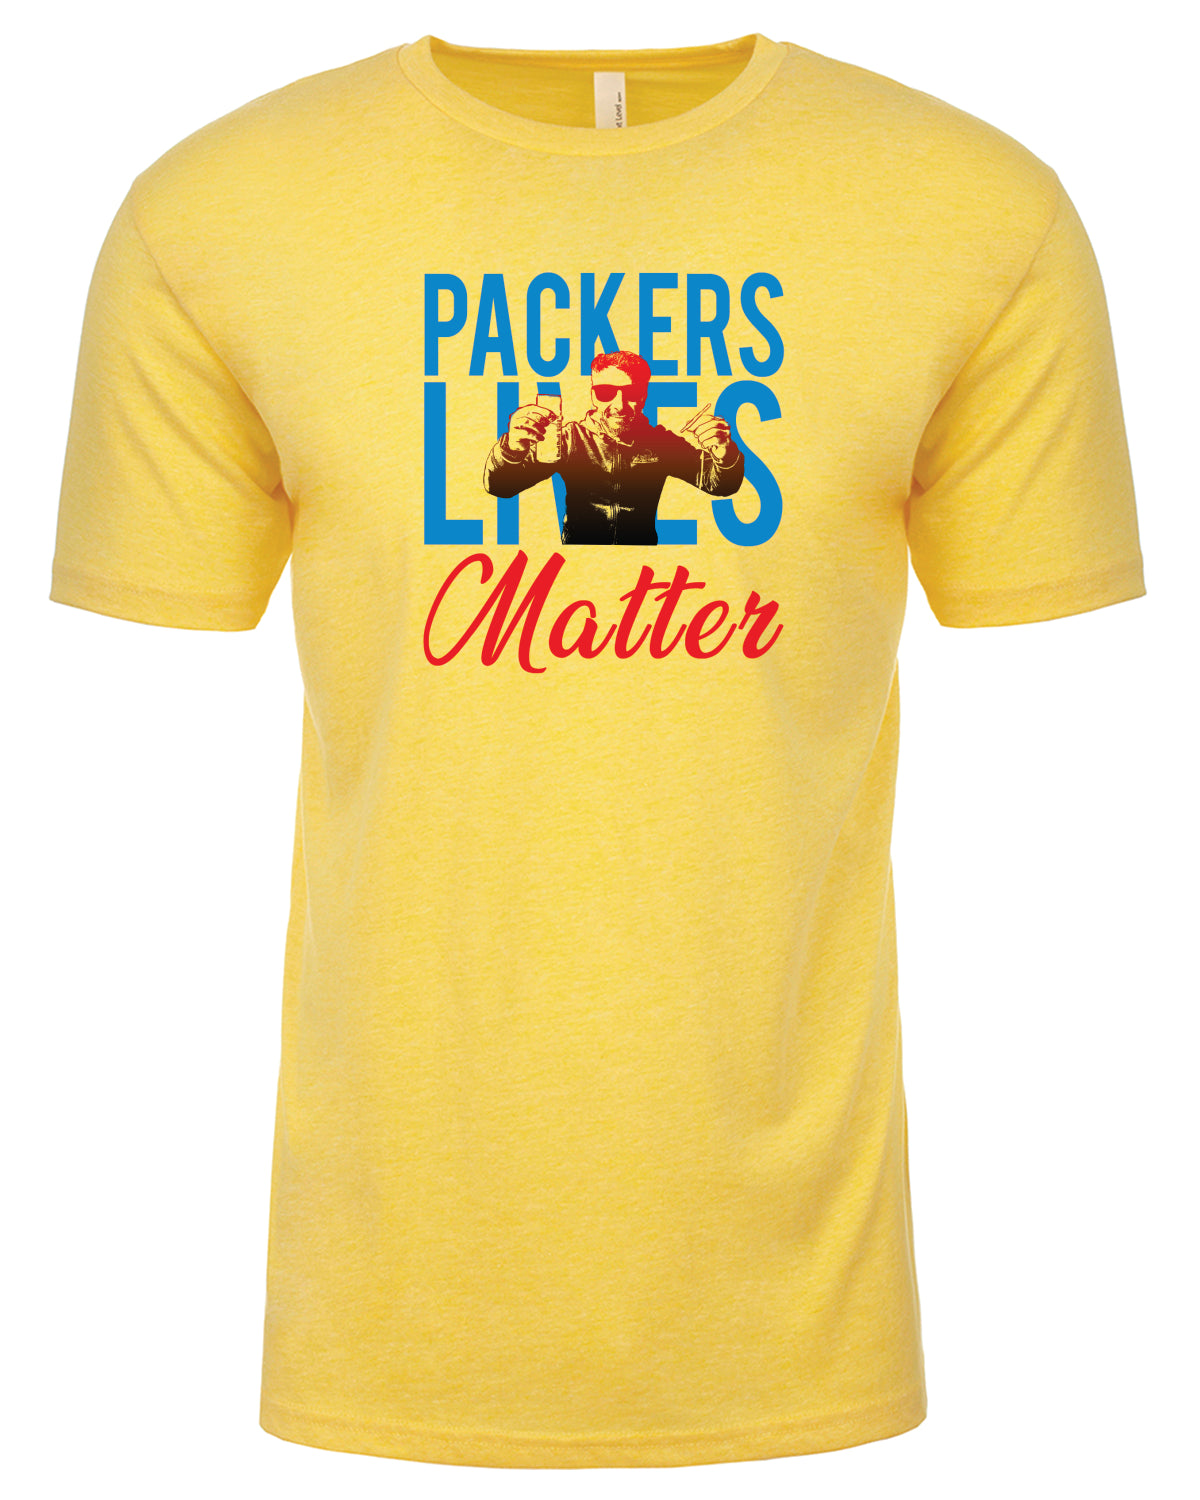 Packers lives Matter